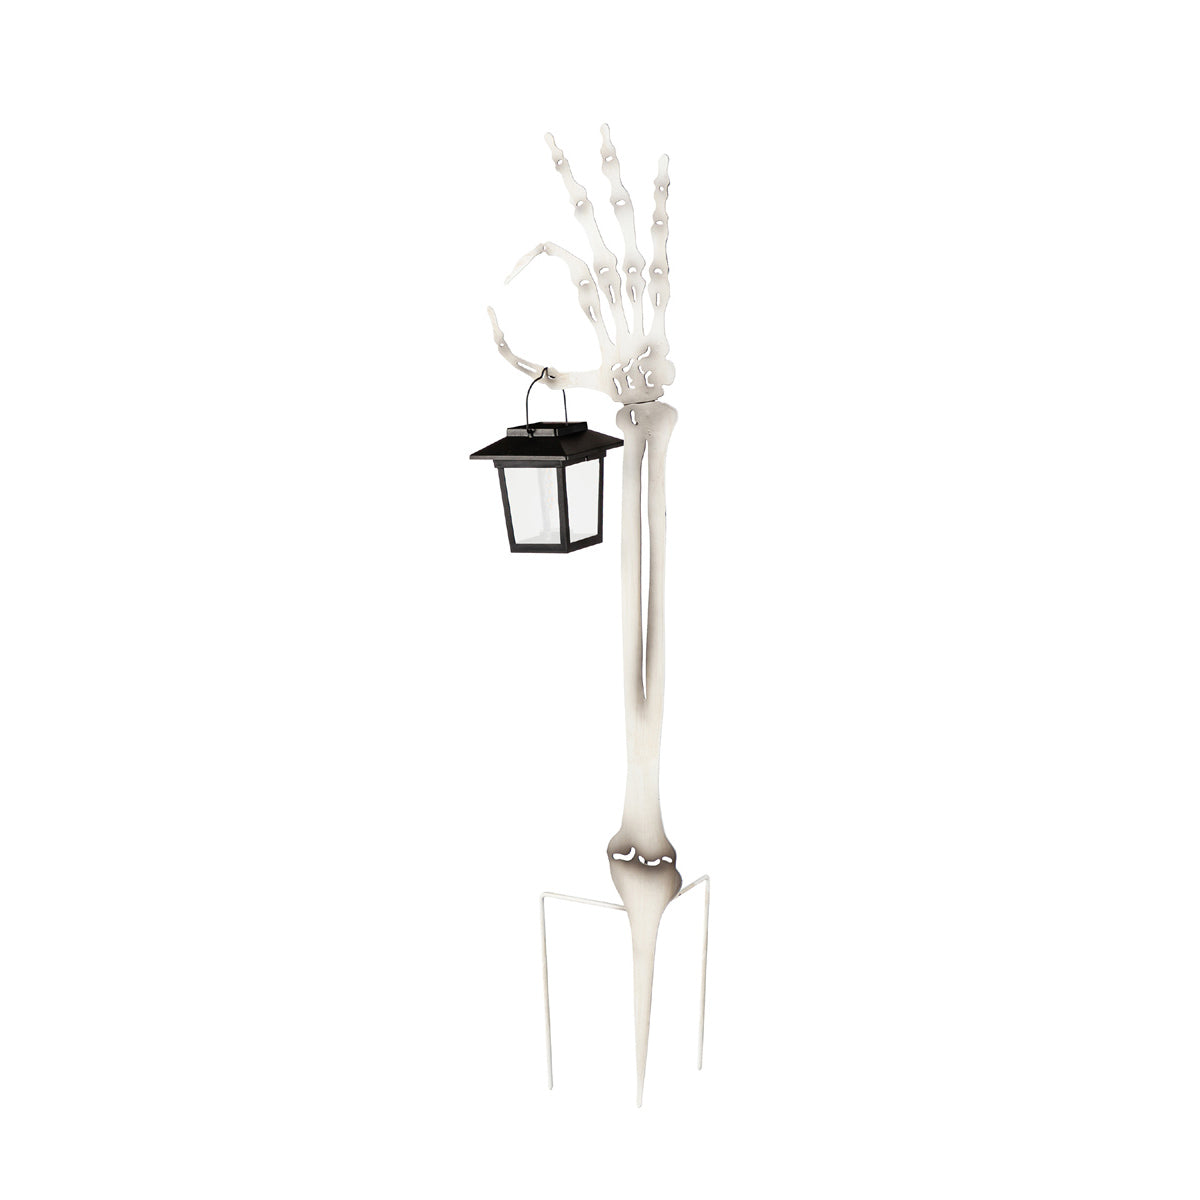 Skeleton Hand Garden Stake w/ Flickering Light Lantern